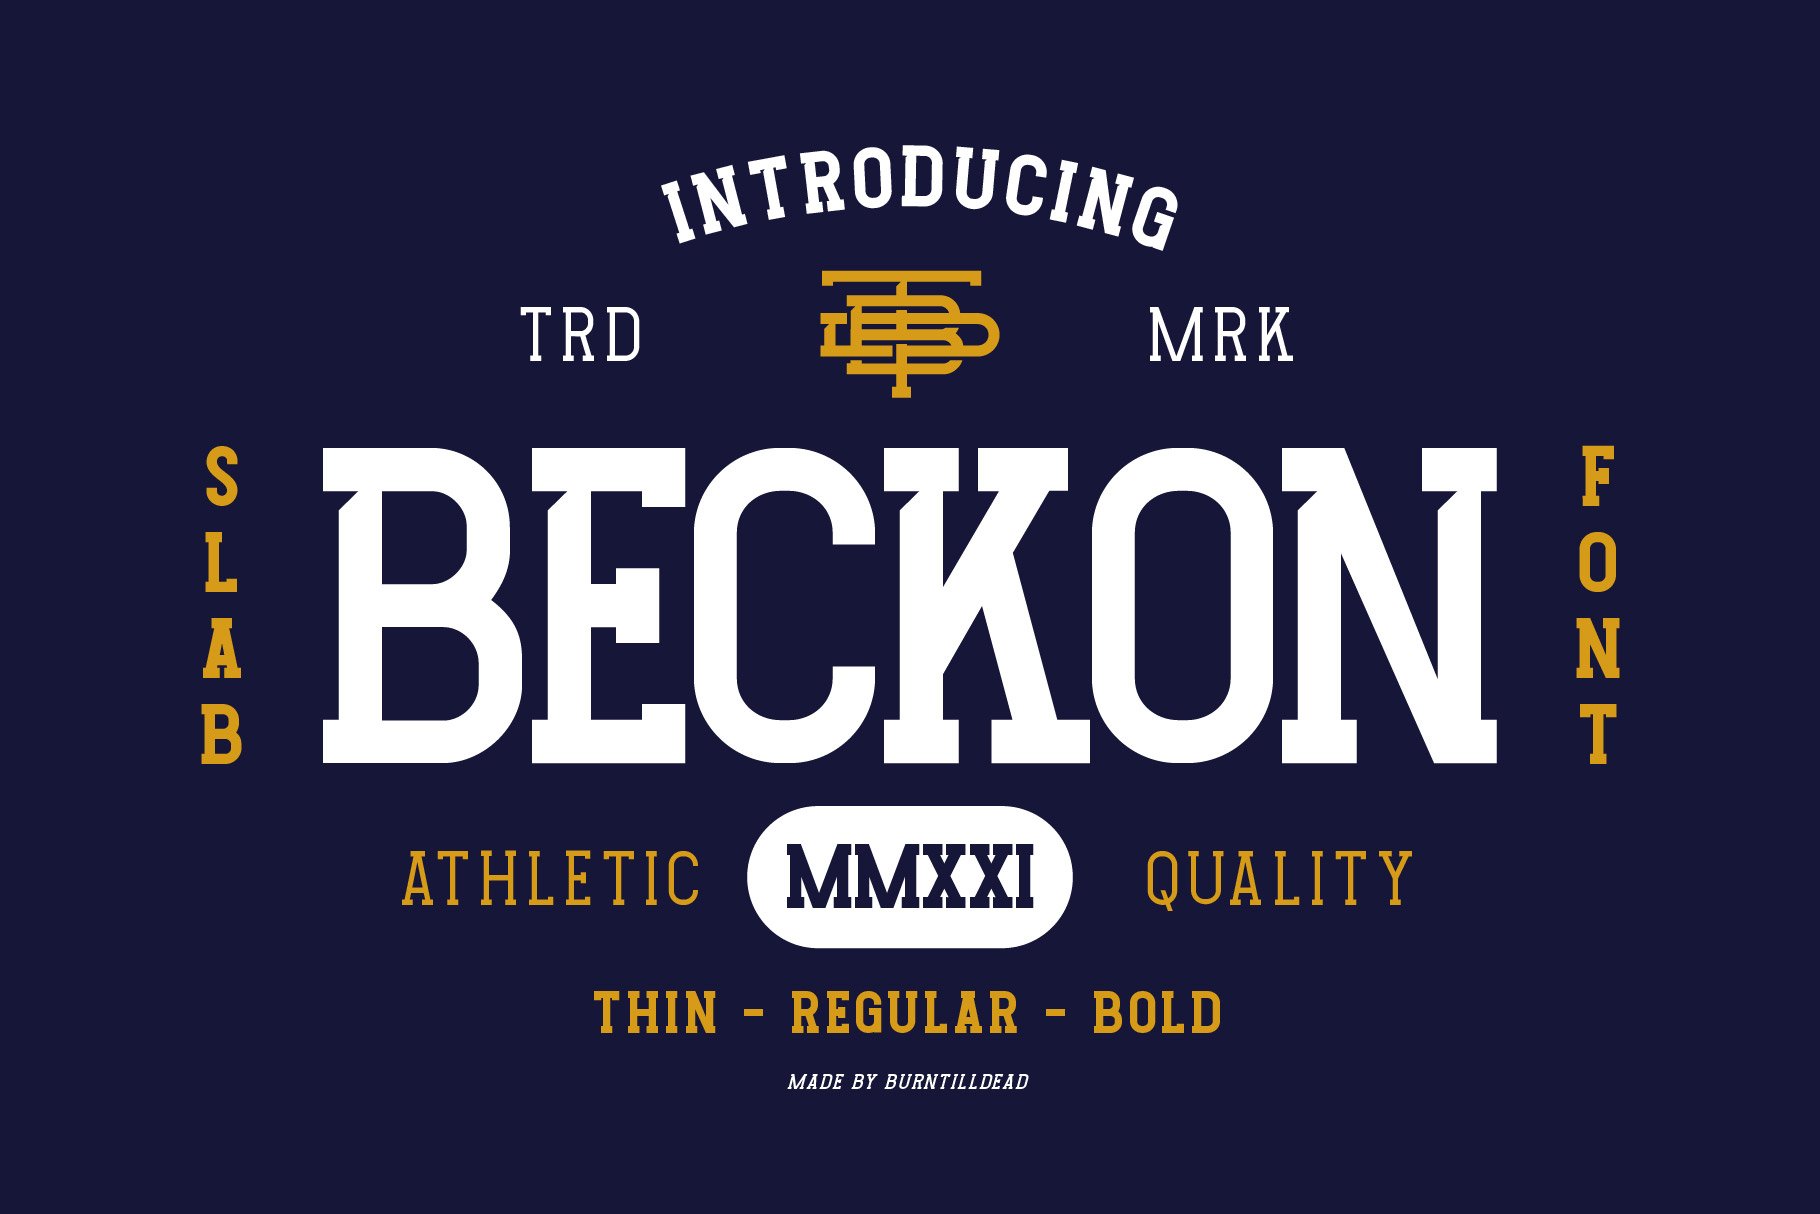 Beckon cover image.